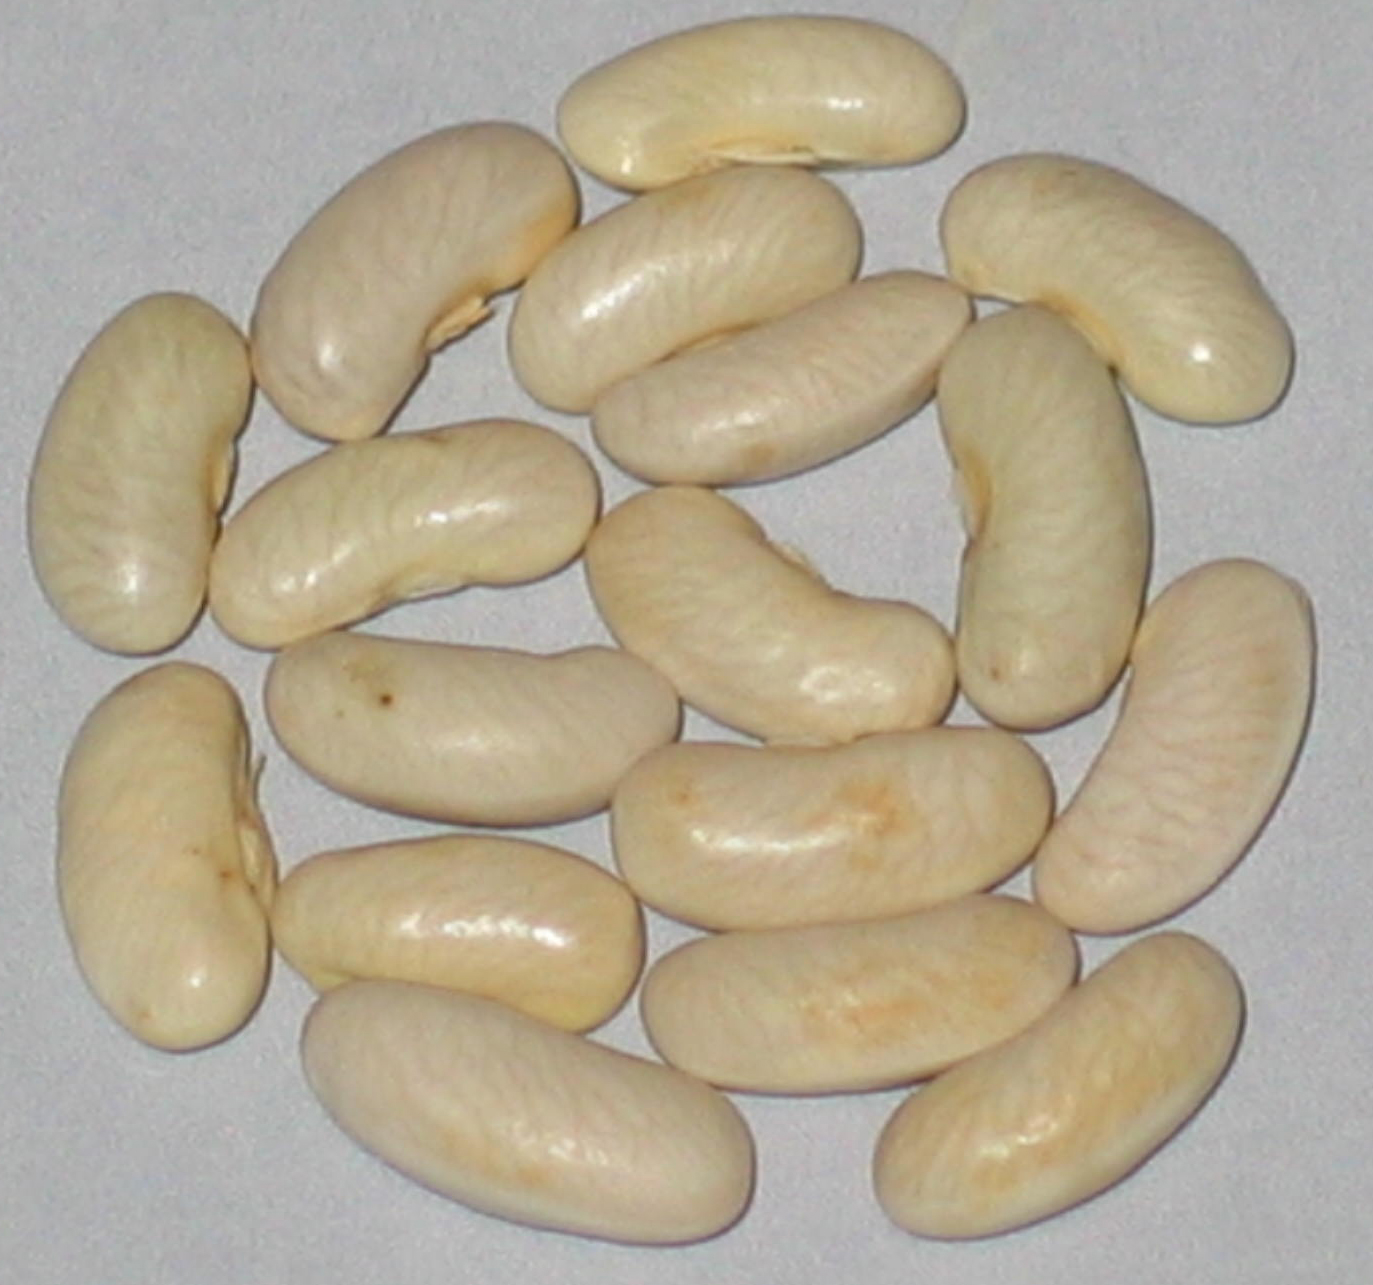 image of Timbavati beans